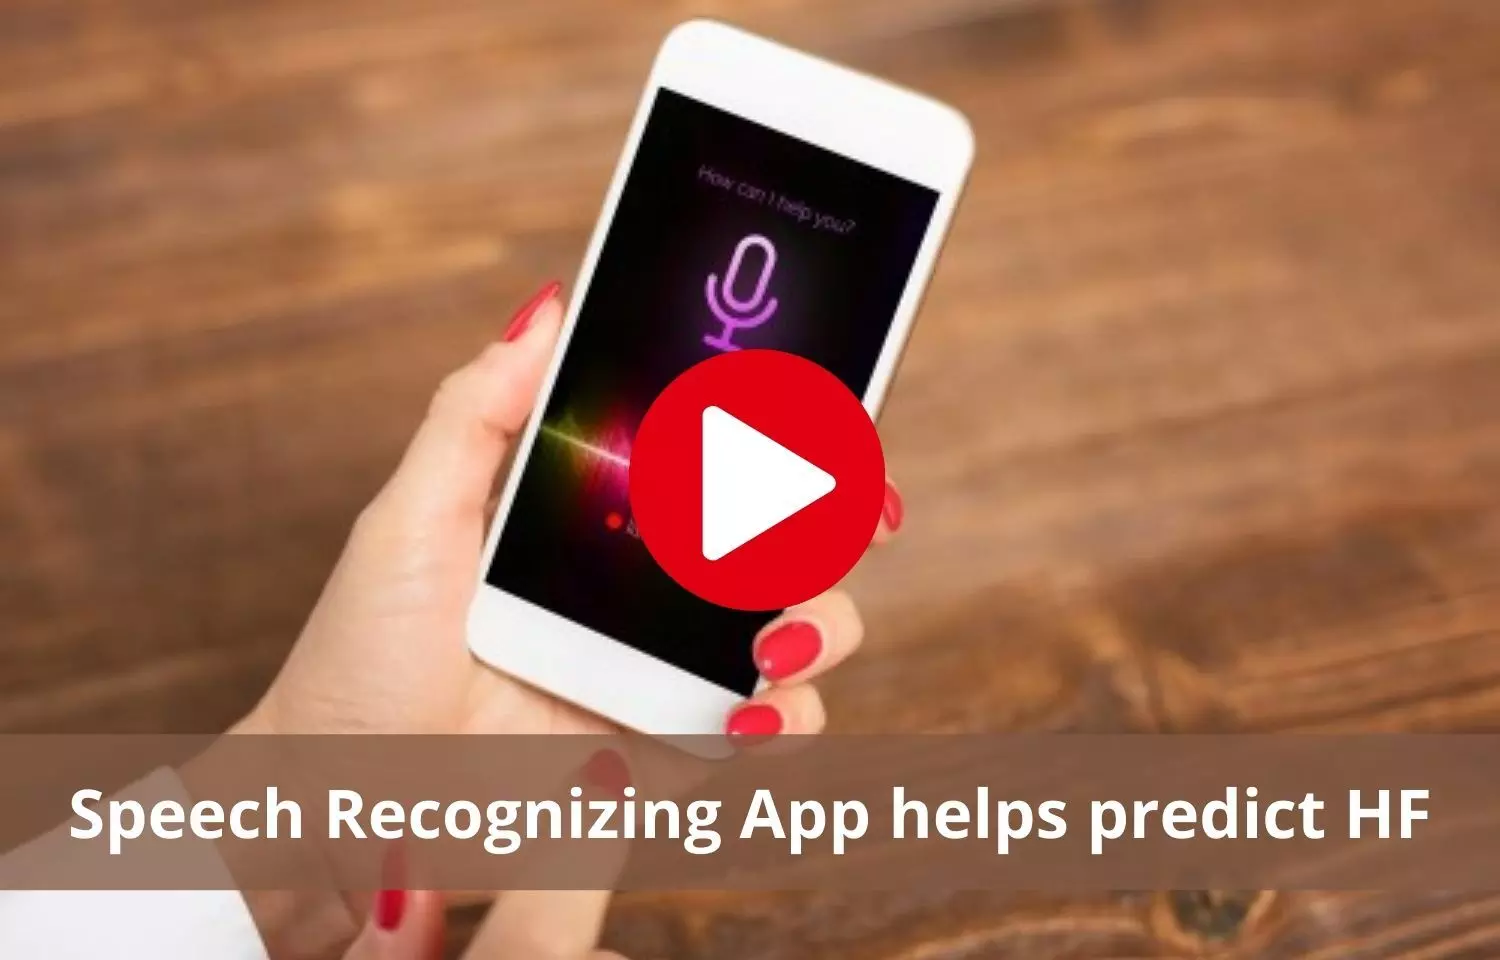 Speech Recognizing App- HearO helps predict heart failure